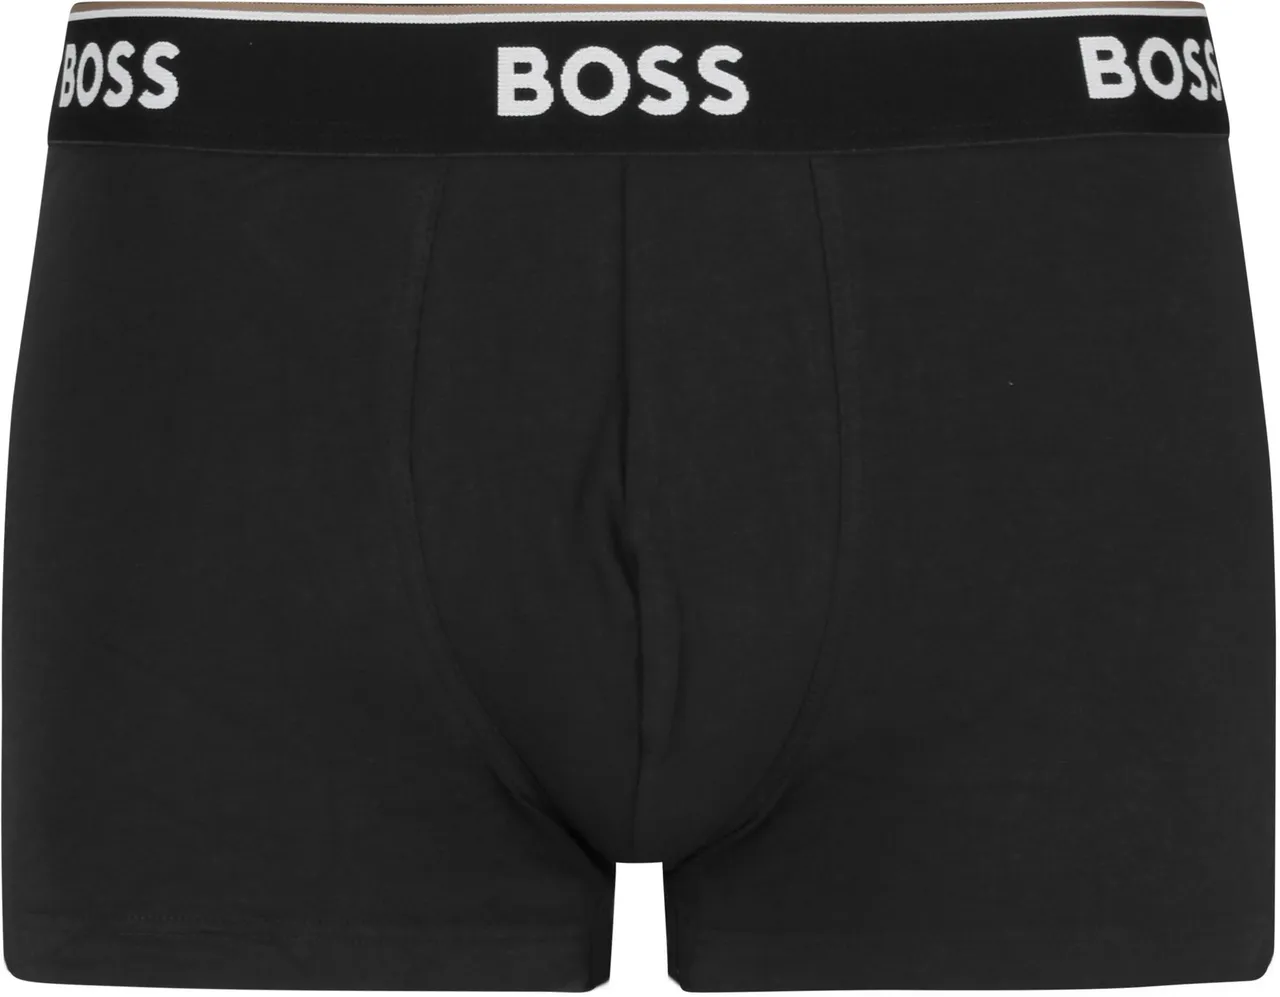 BOSS Short Boxer Shorts Power 3-Pack 061 Grey Dark Grey Multicolour Black